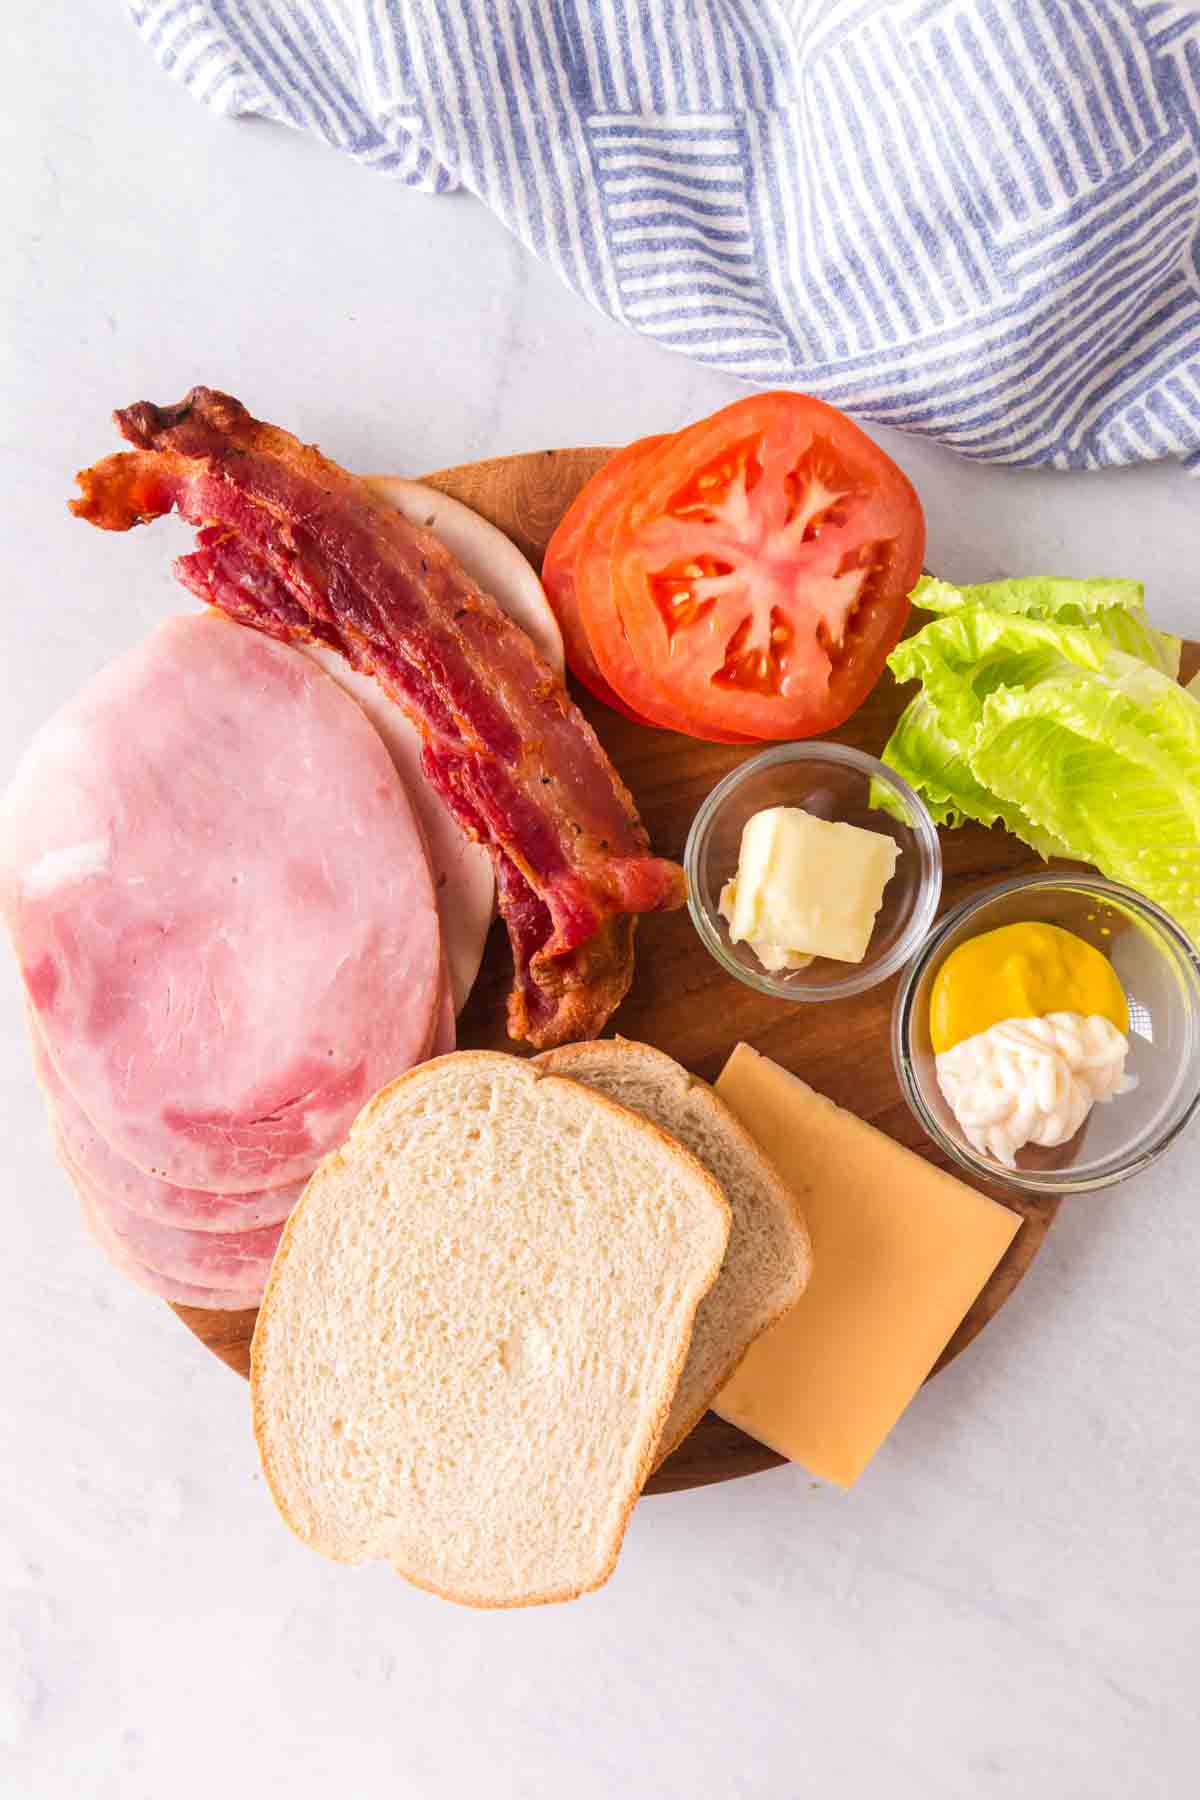 Ingredients for a club sandwich. 